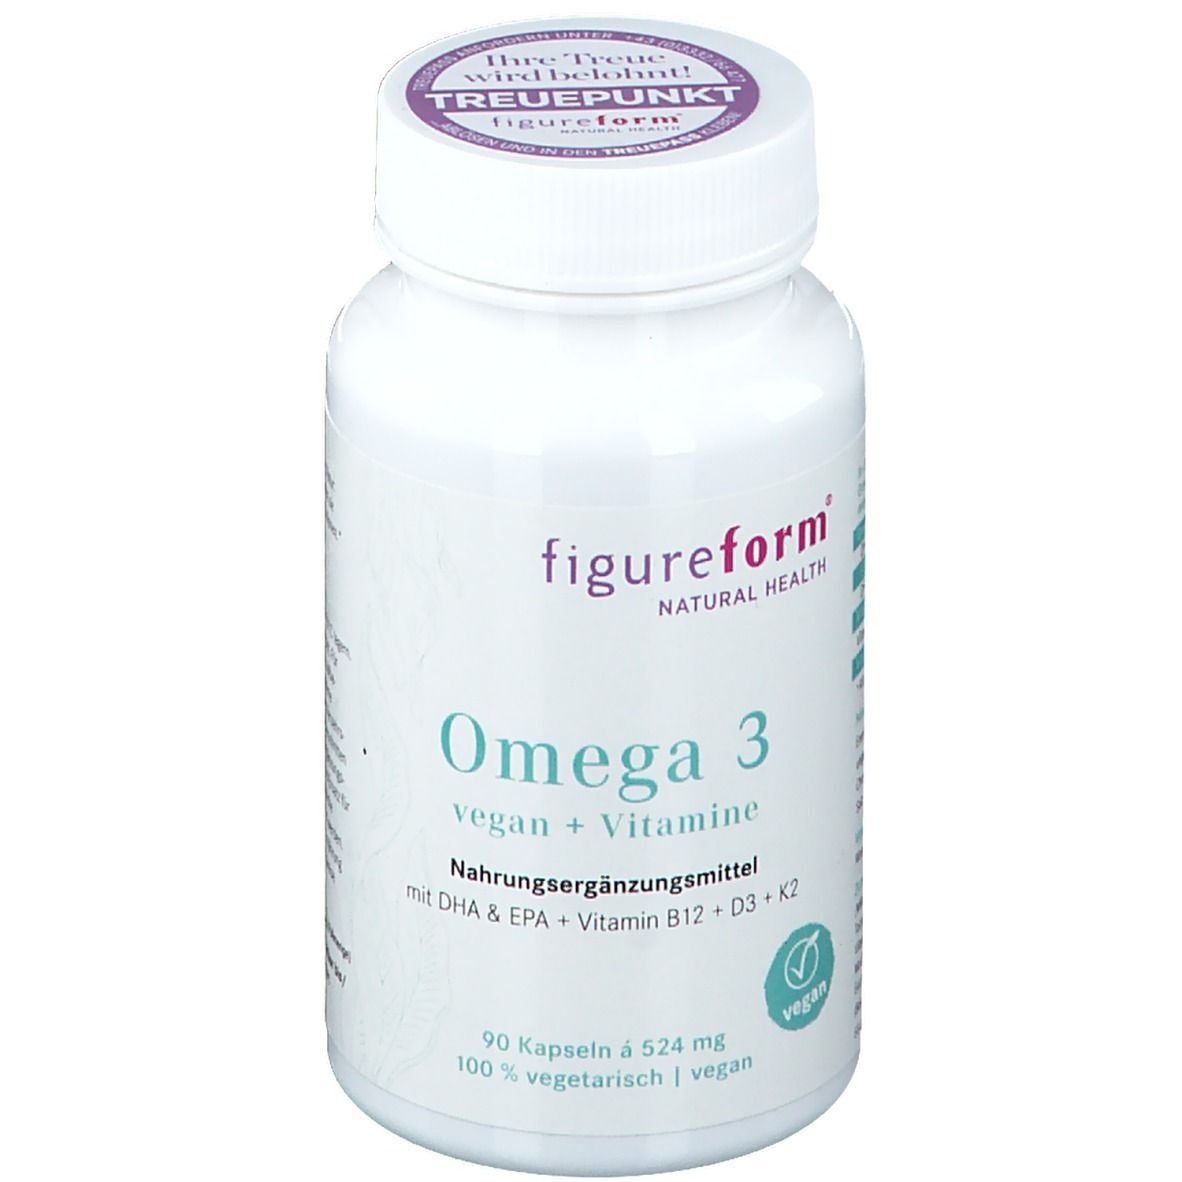 Image of Omega 3 vegan + Vitamine